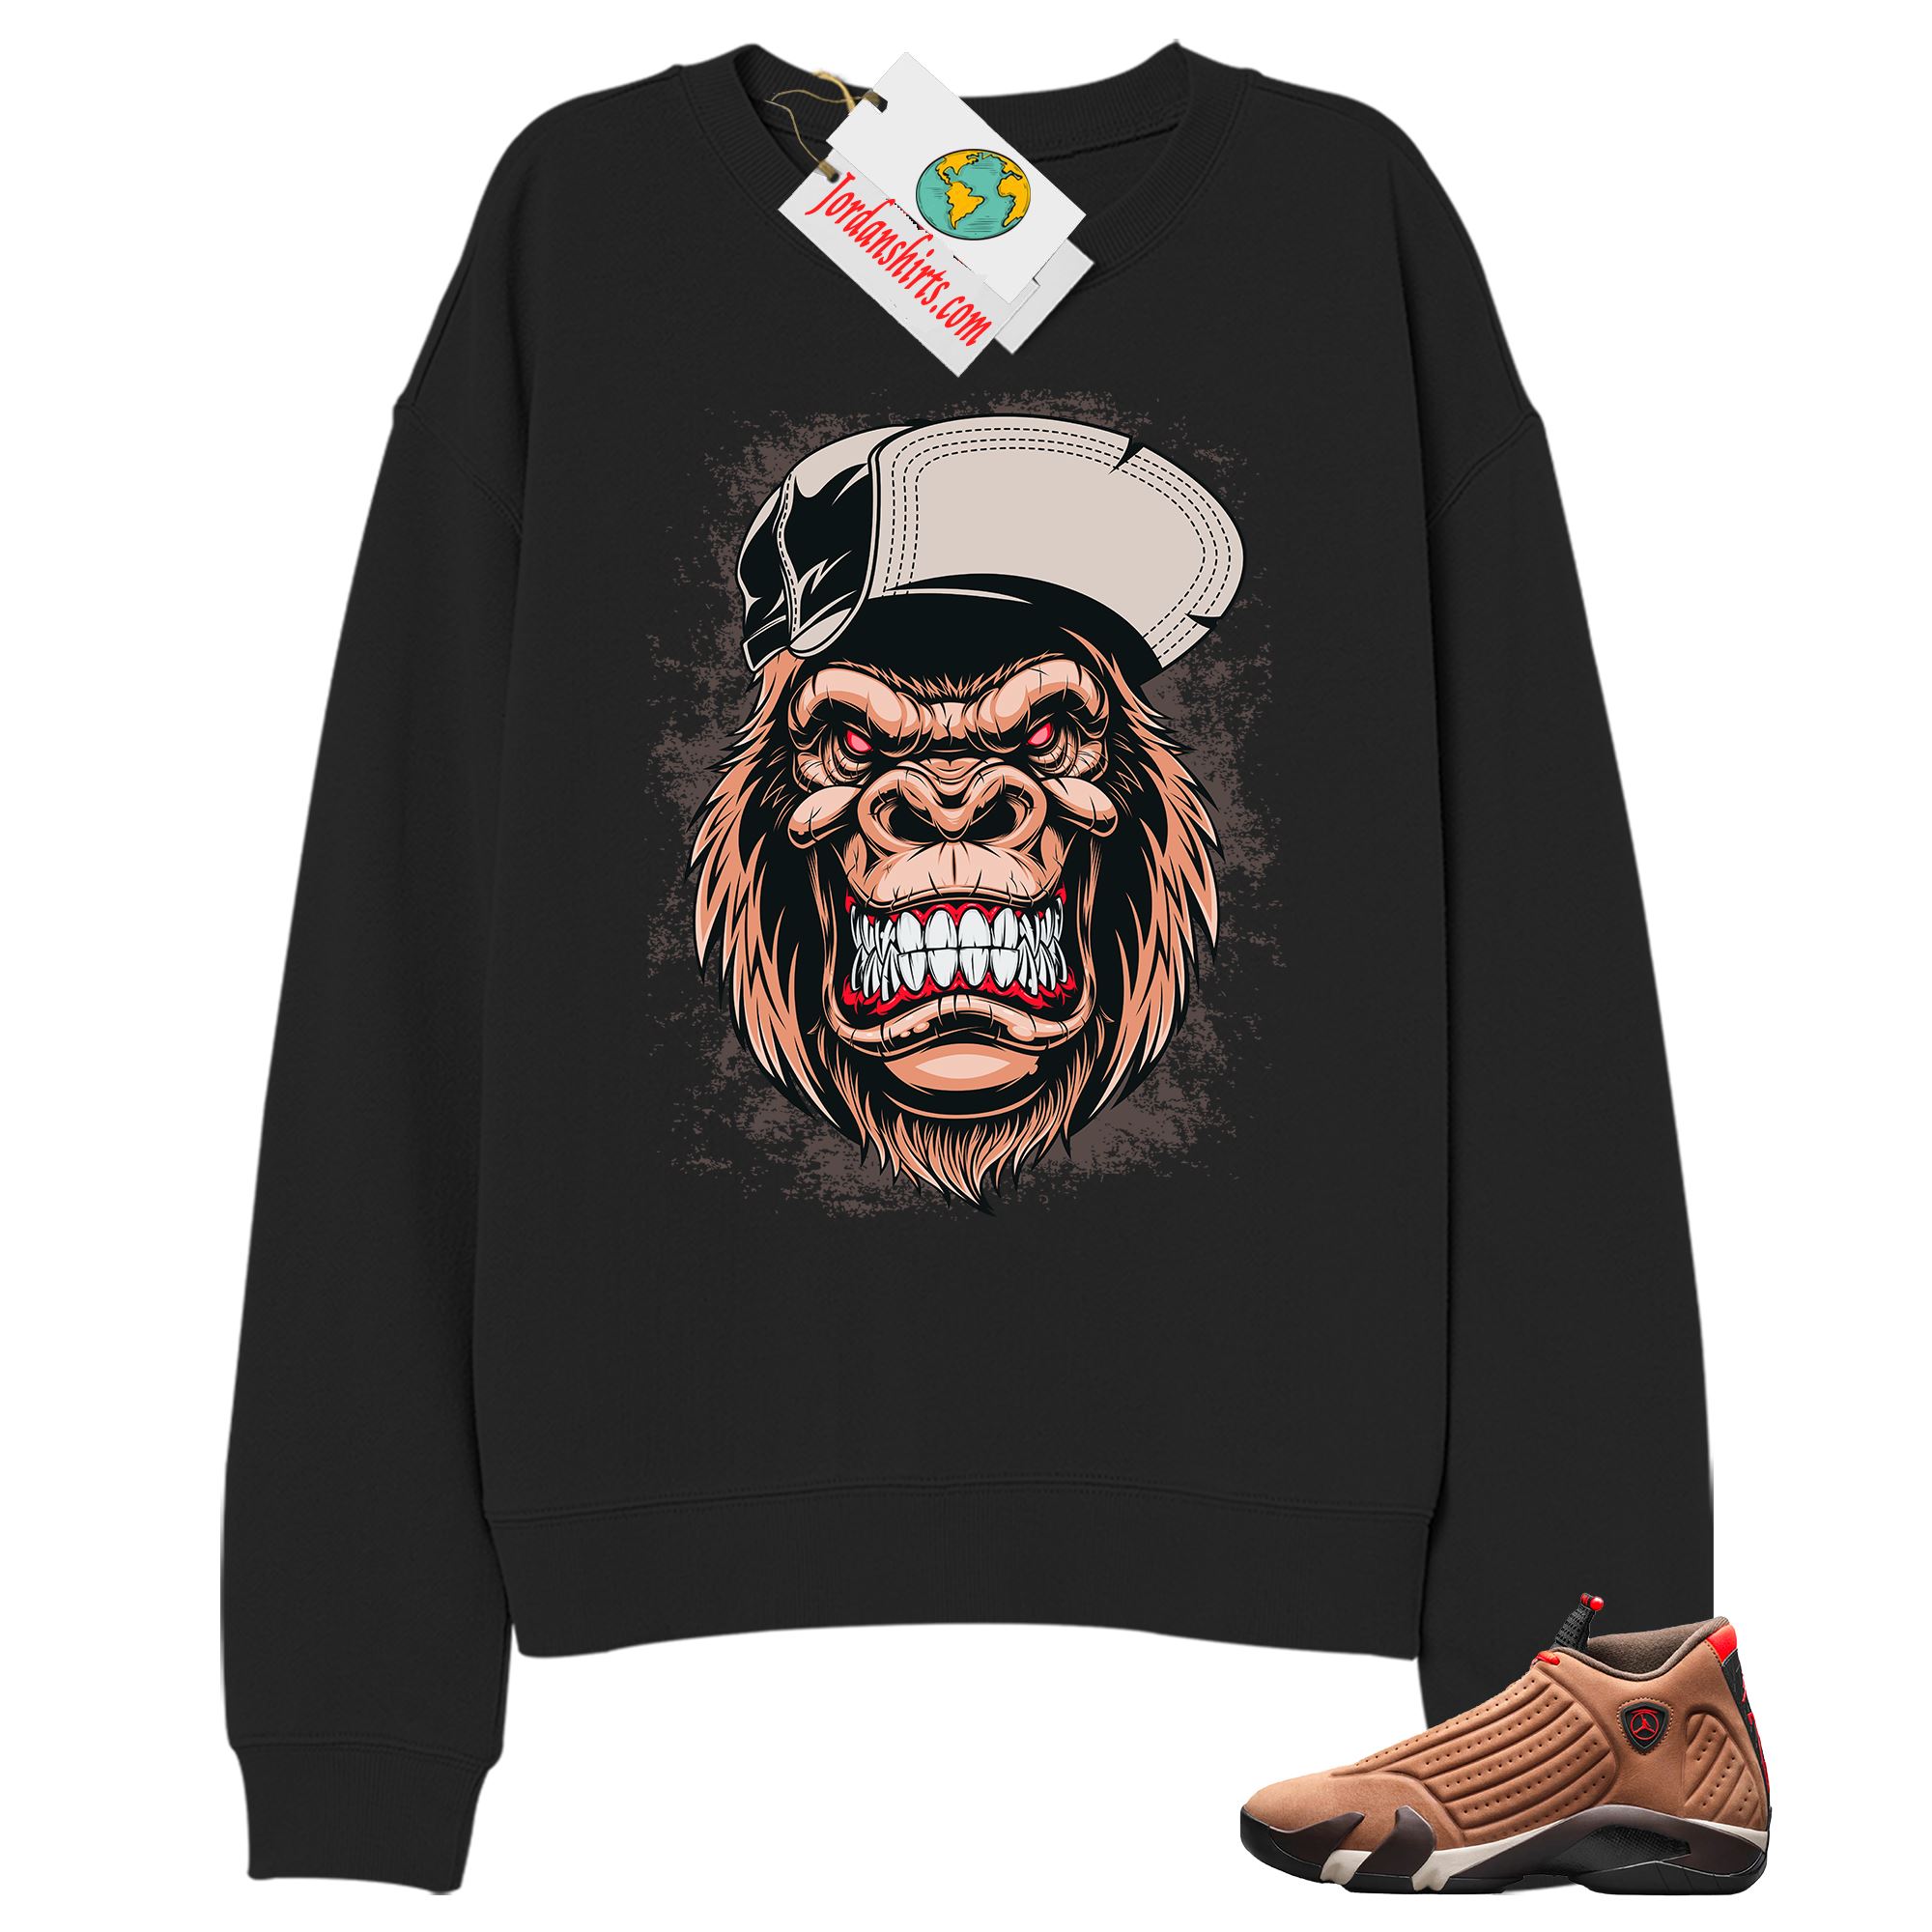 Jordan 14 Sweatshirt, Ferocious Gorilla Black Sweatshirt Air Jordan 14 Winterized 14s Full Size Up To 5xl